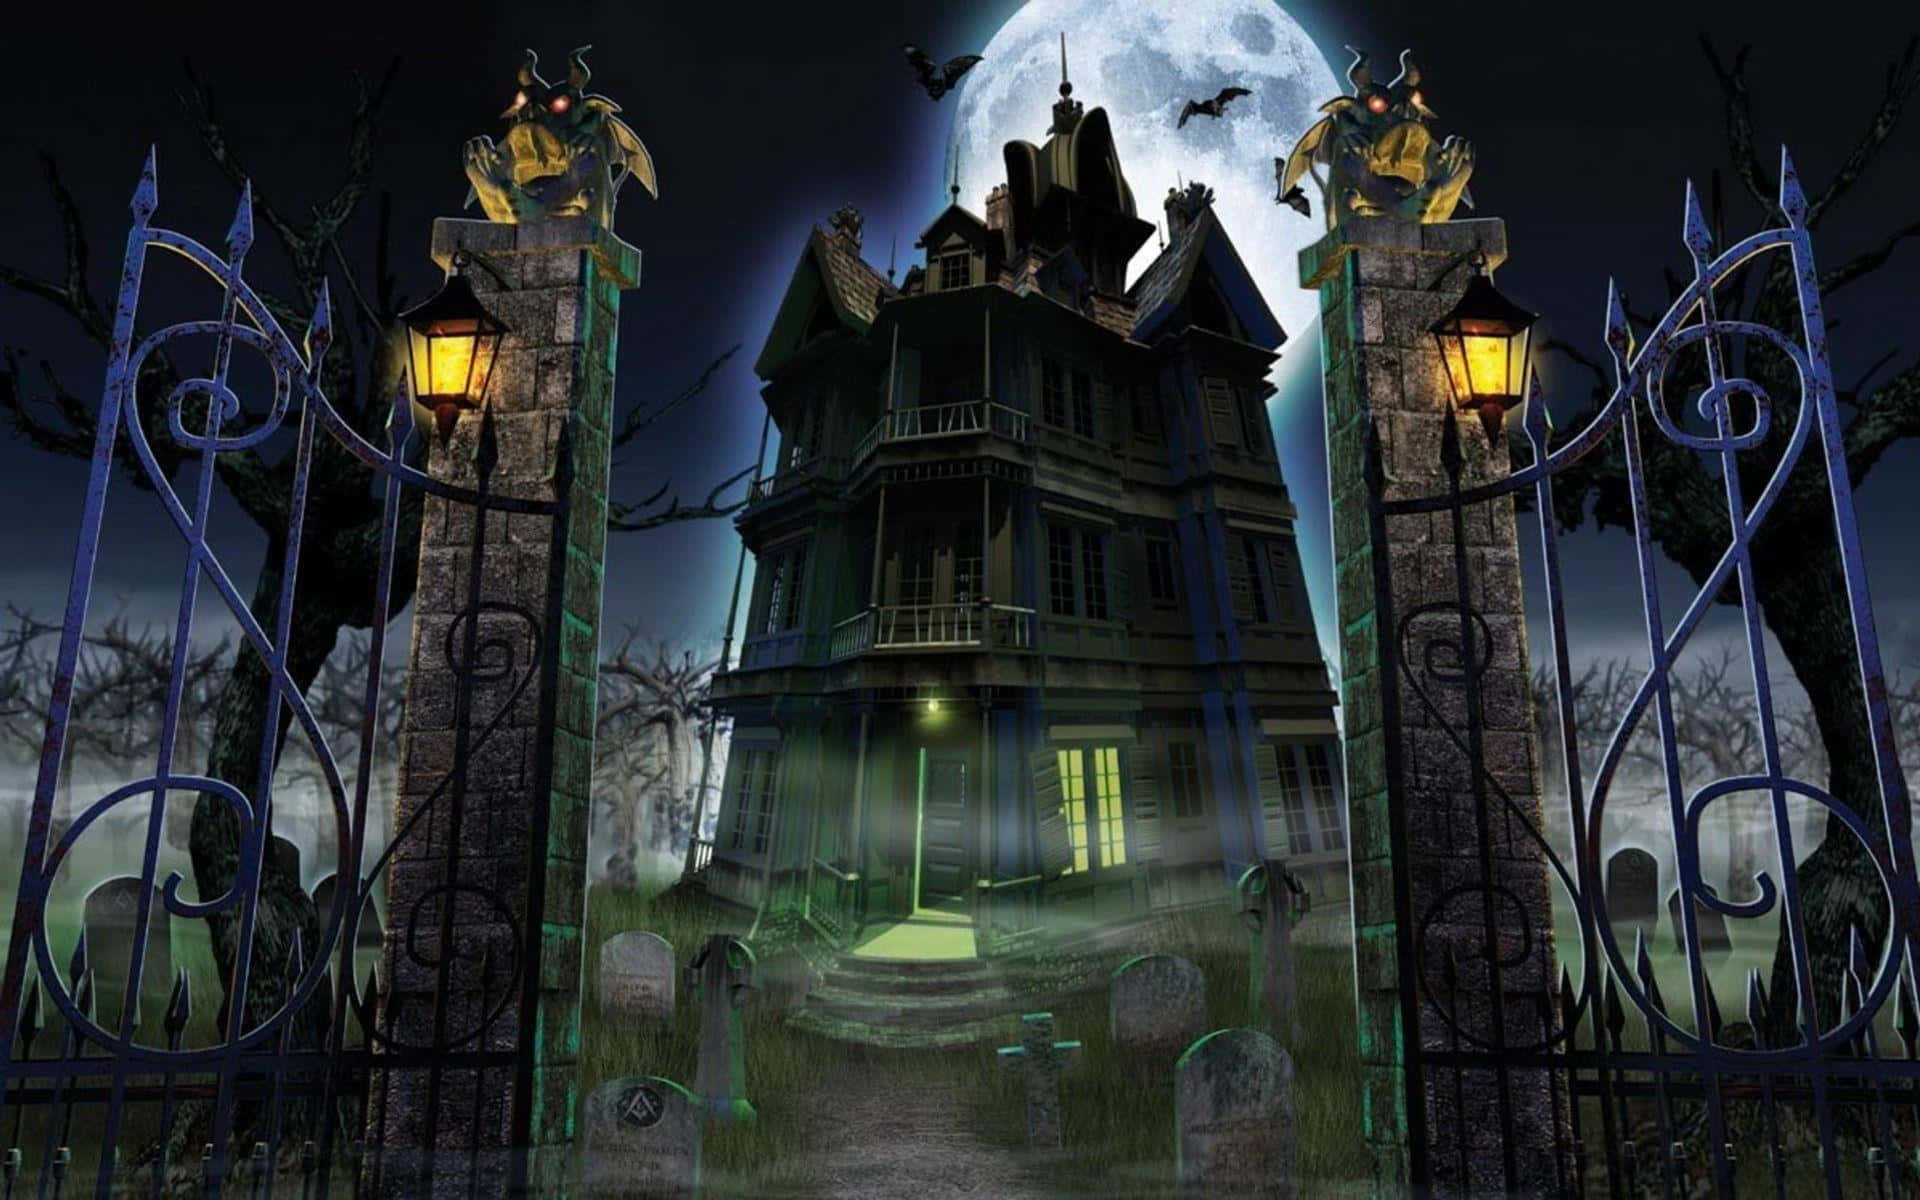 Eerie Awakening - An Ancient Haunted Mansion Under Spectral Moonlight